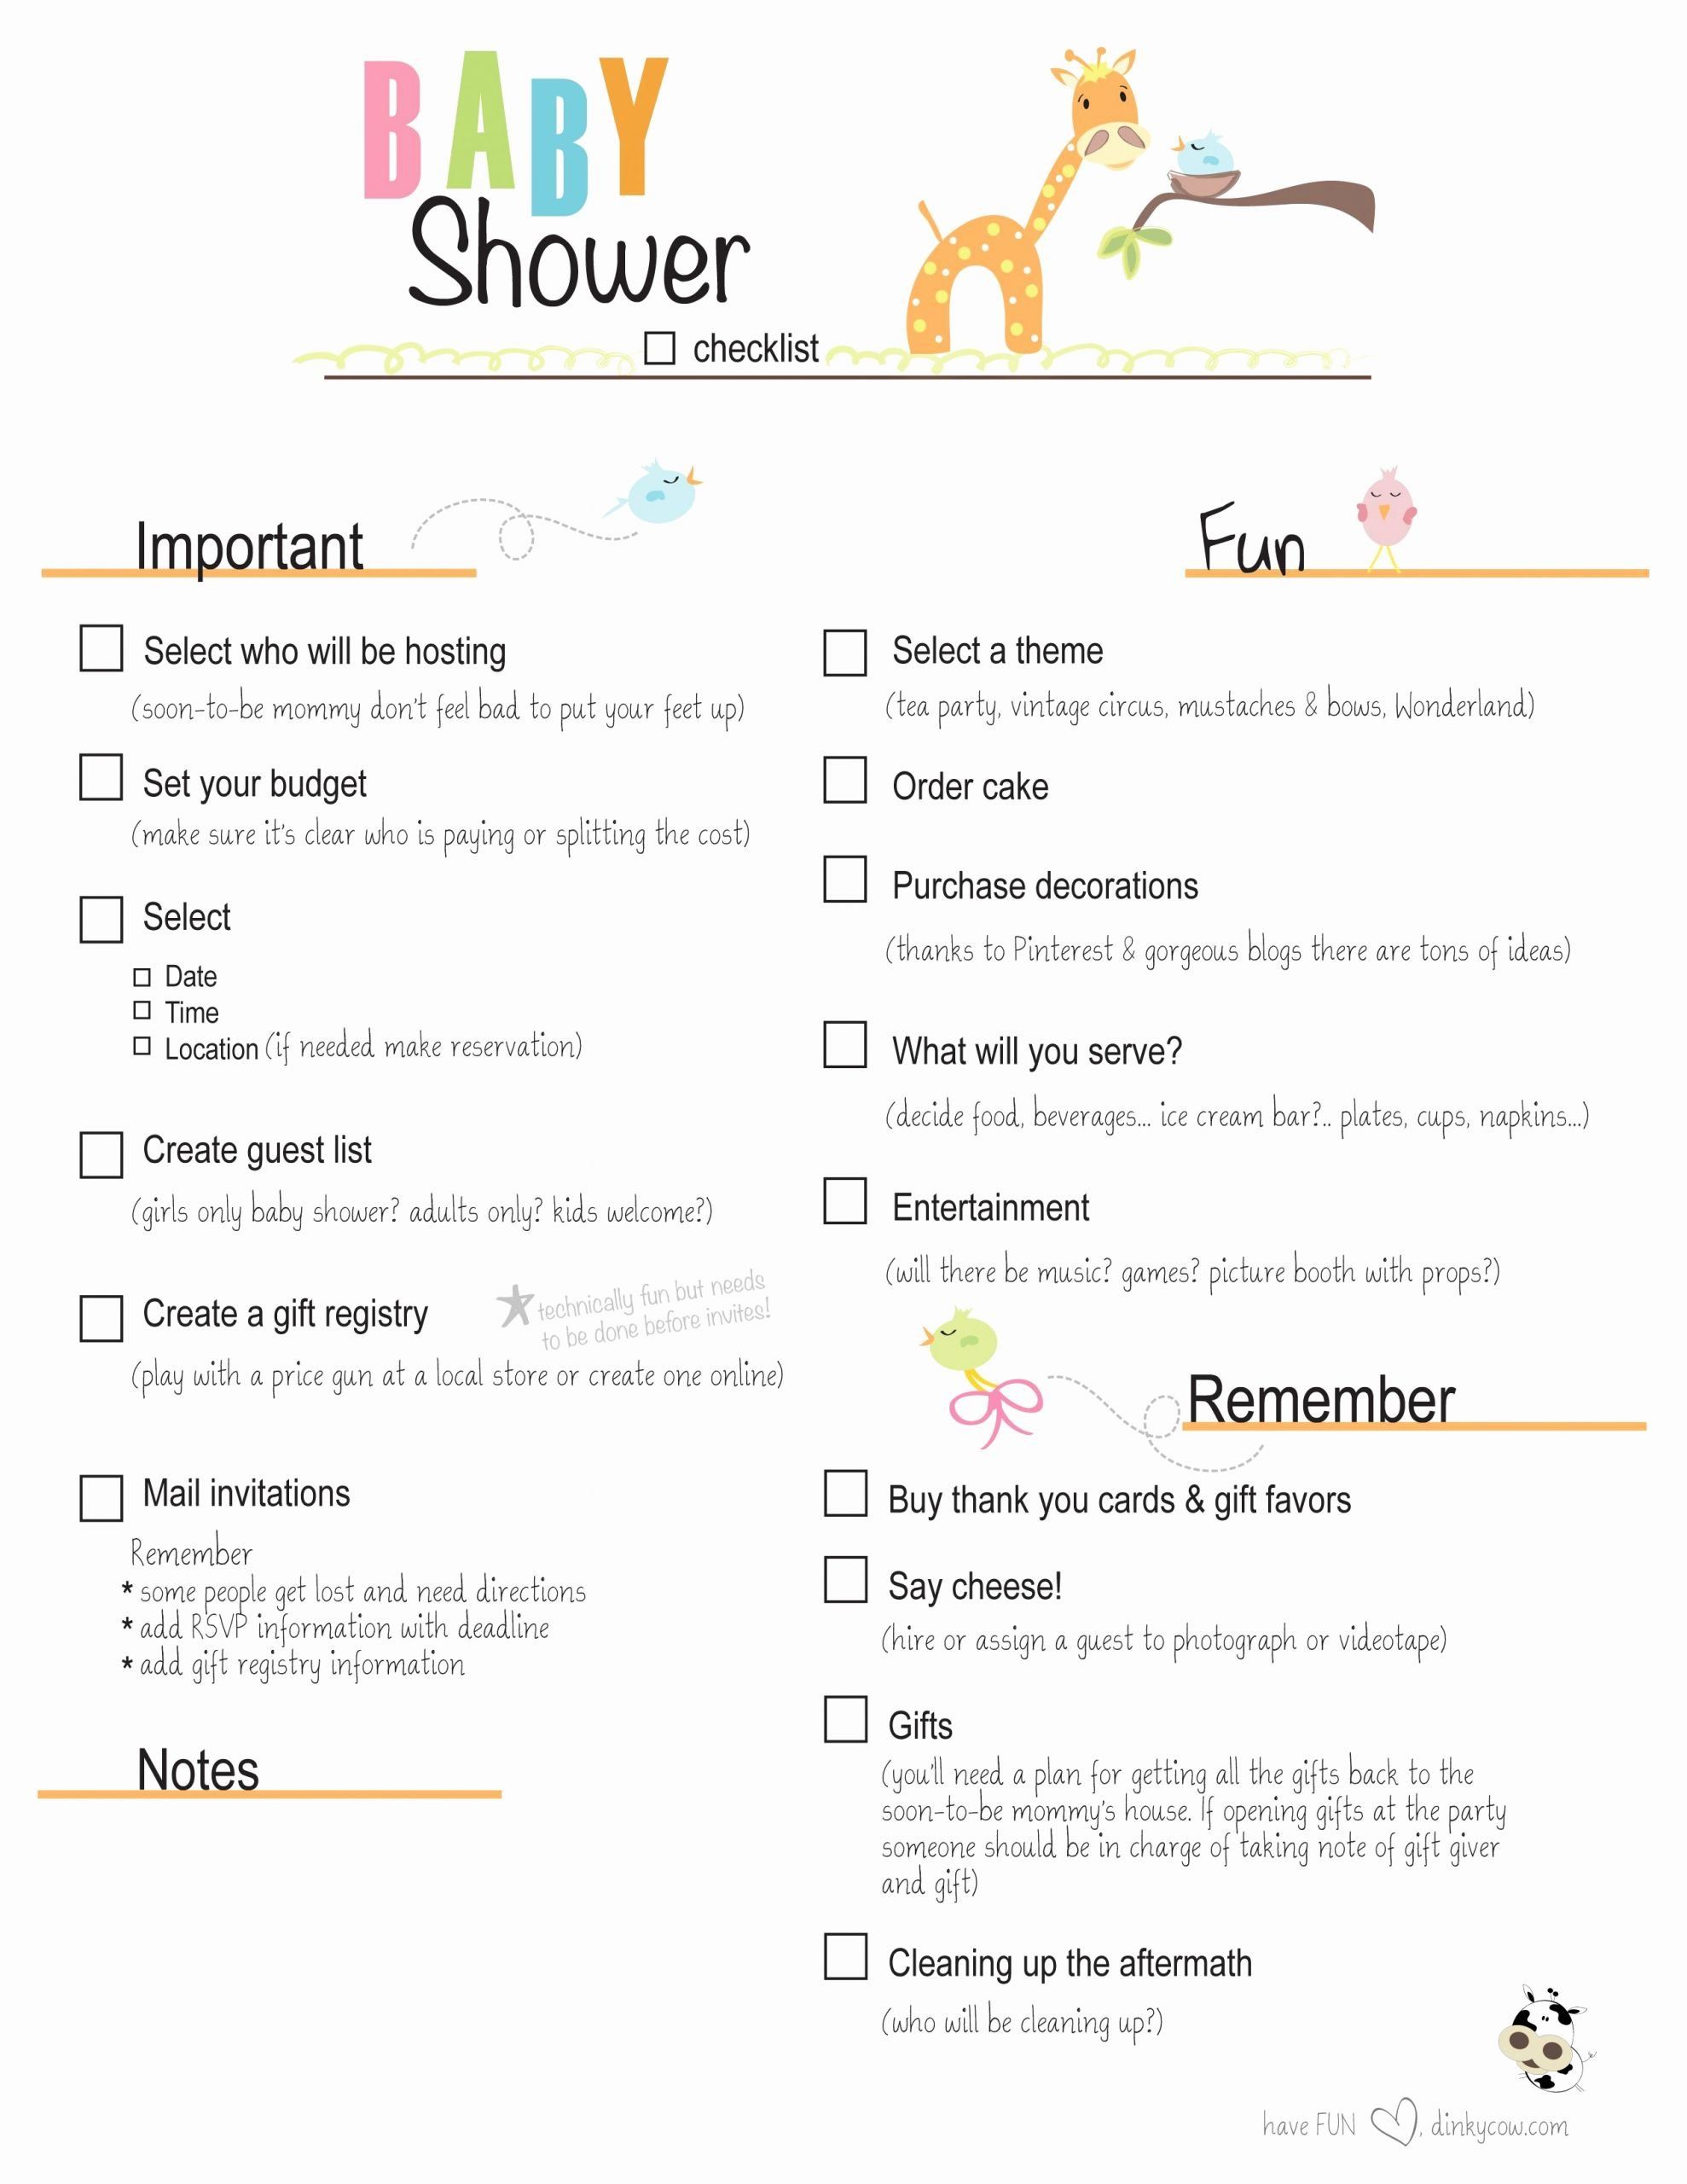 Baby Shower Planner Template Inspirational Free Printable Baby Shower Checklist Baby Shower Planning Checklist Baby Shower Checklist Baby Shower Planner